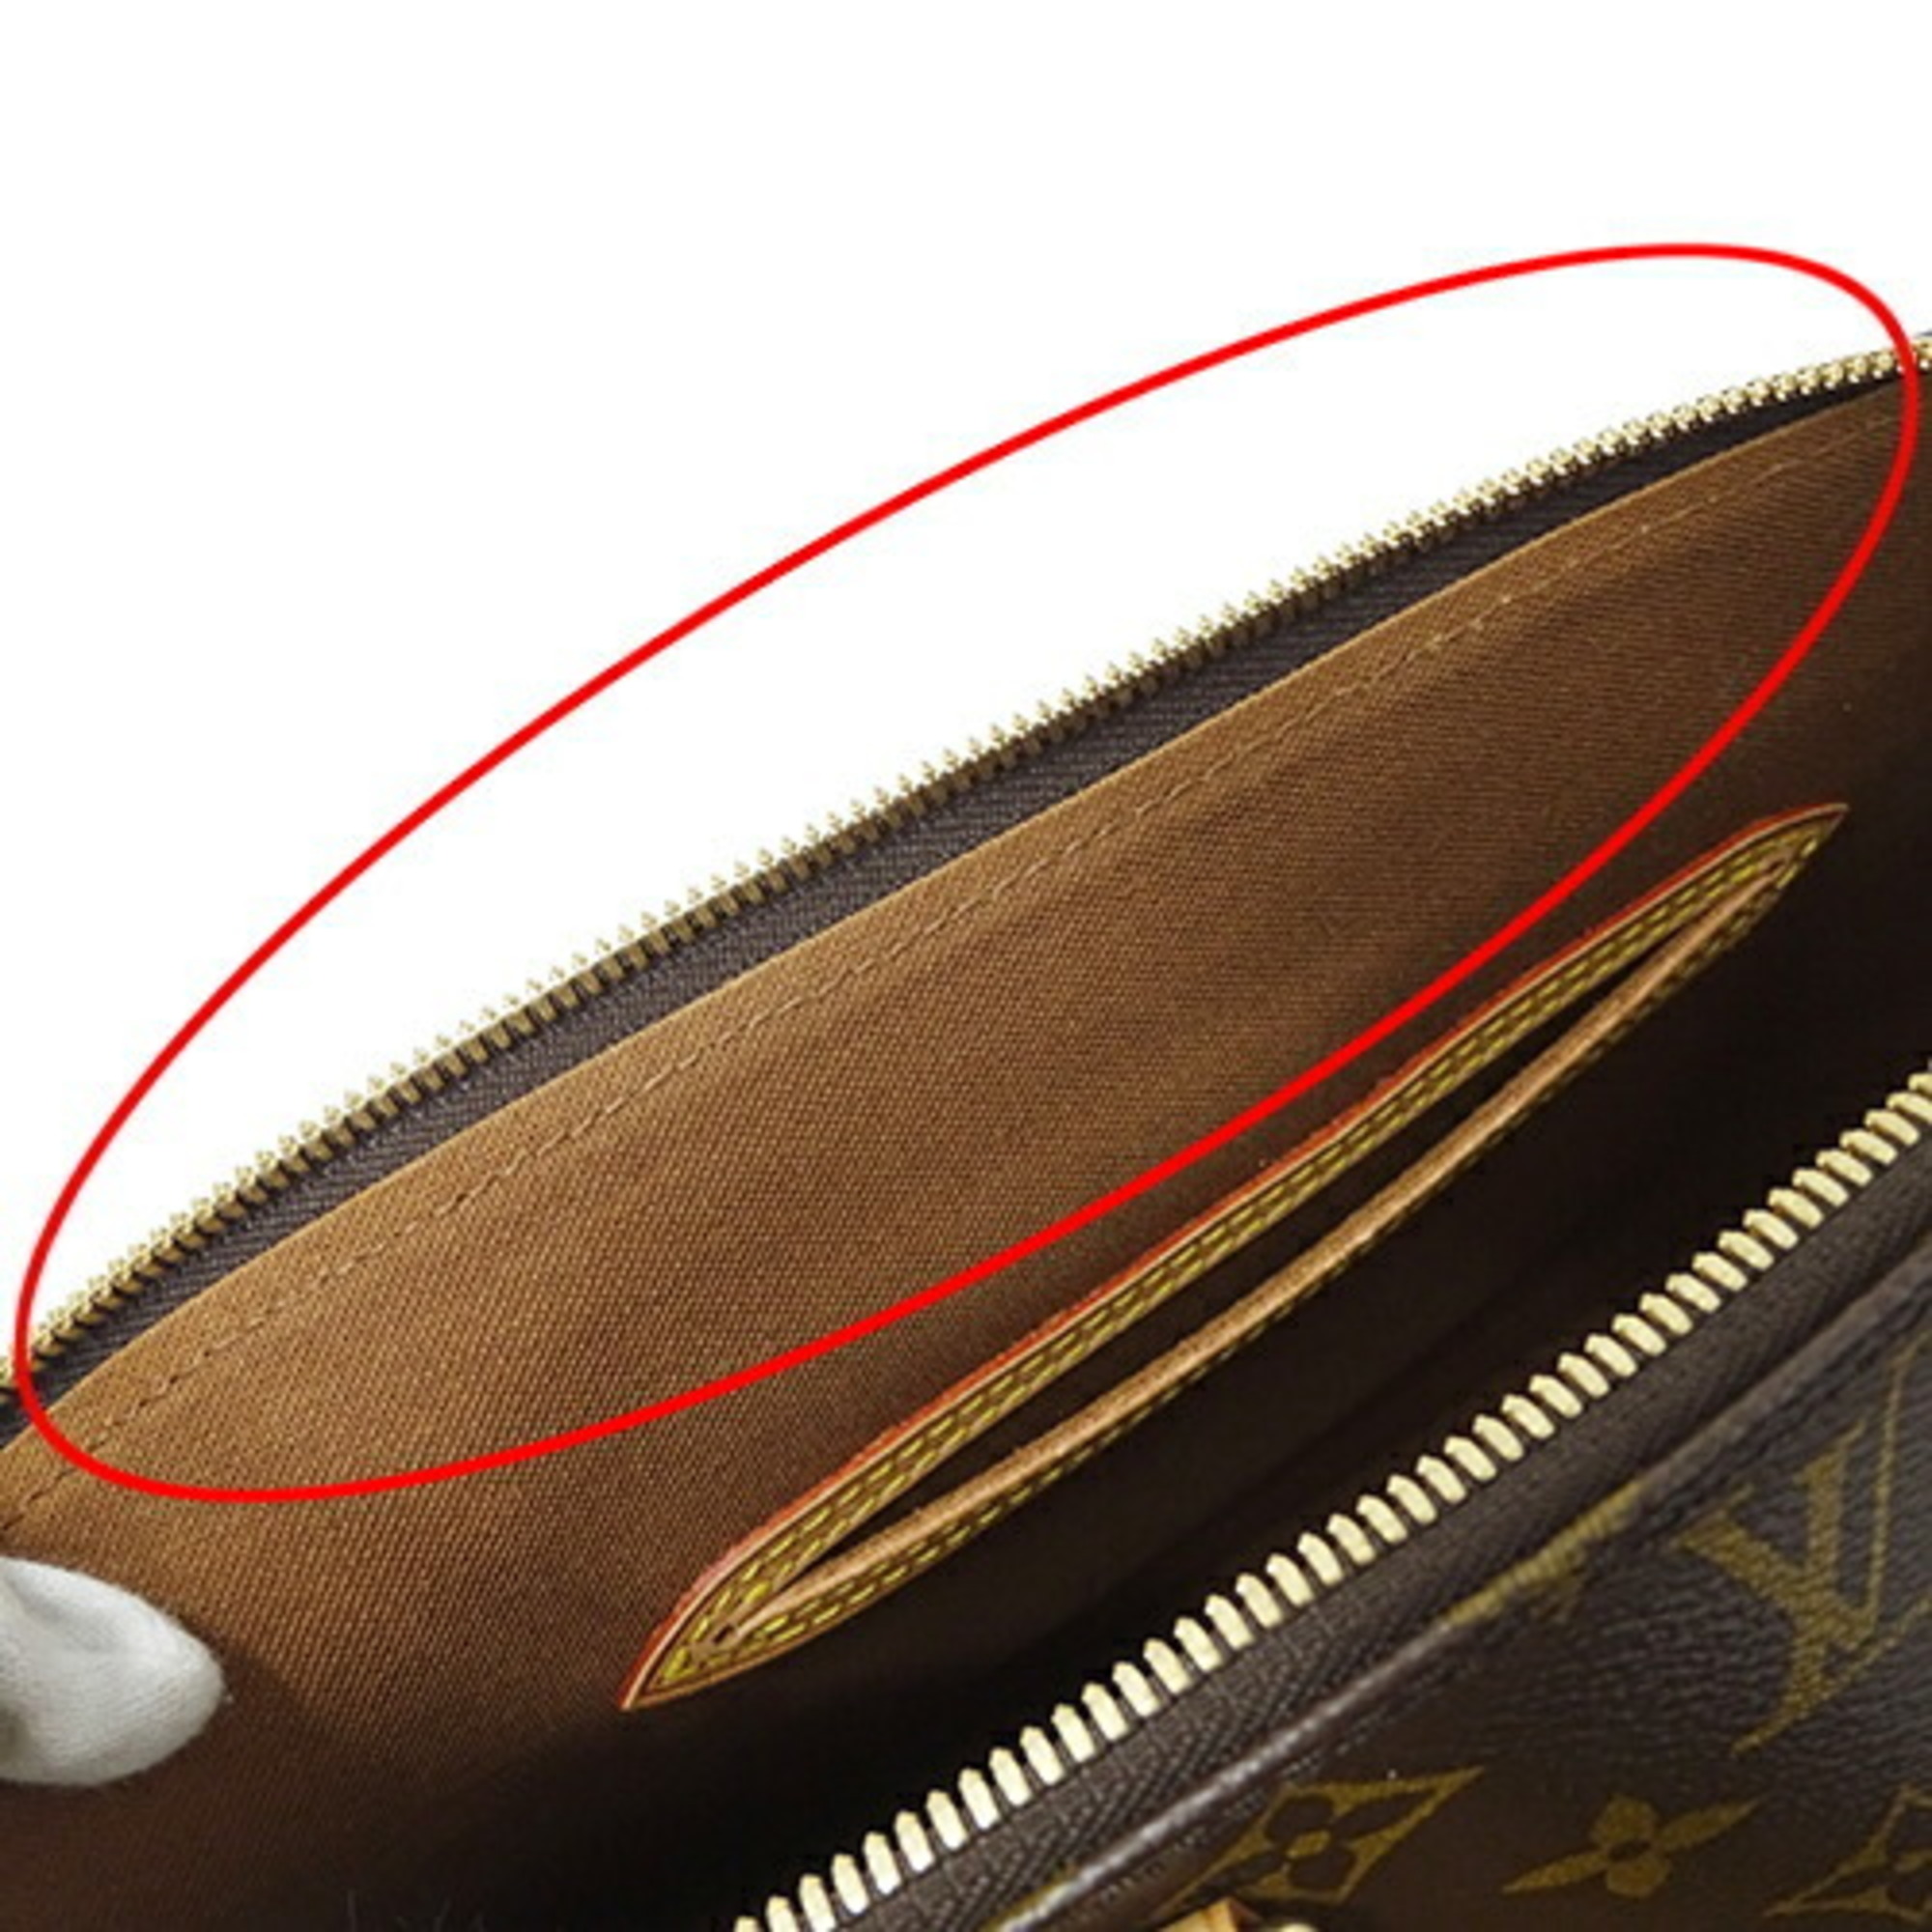 Louis Vuitton LOUIS VUITTON Bag Monogram Women's Handbag Alma M51130 Brown